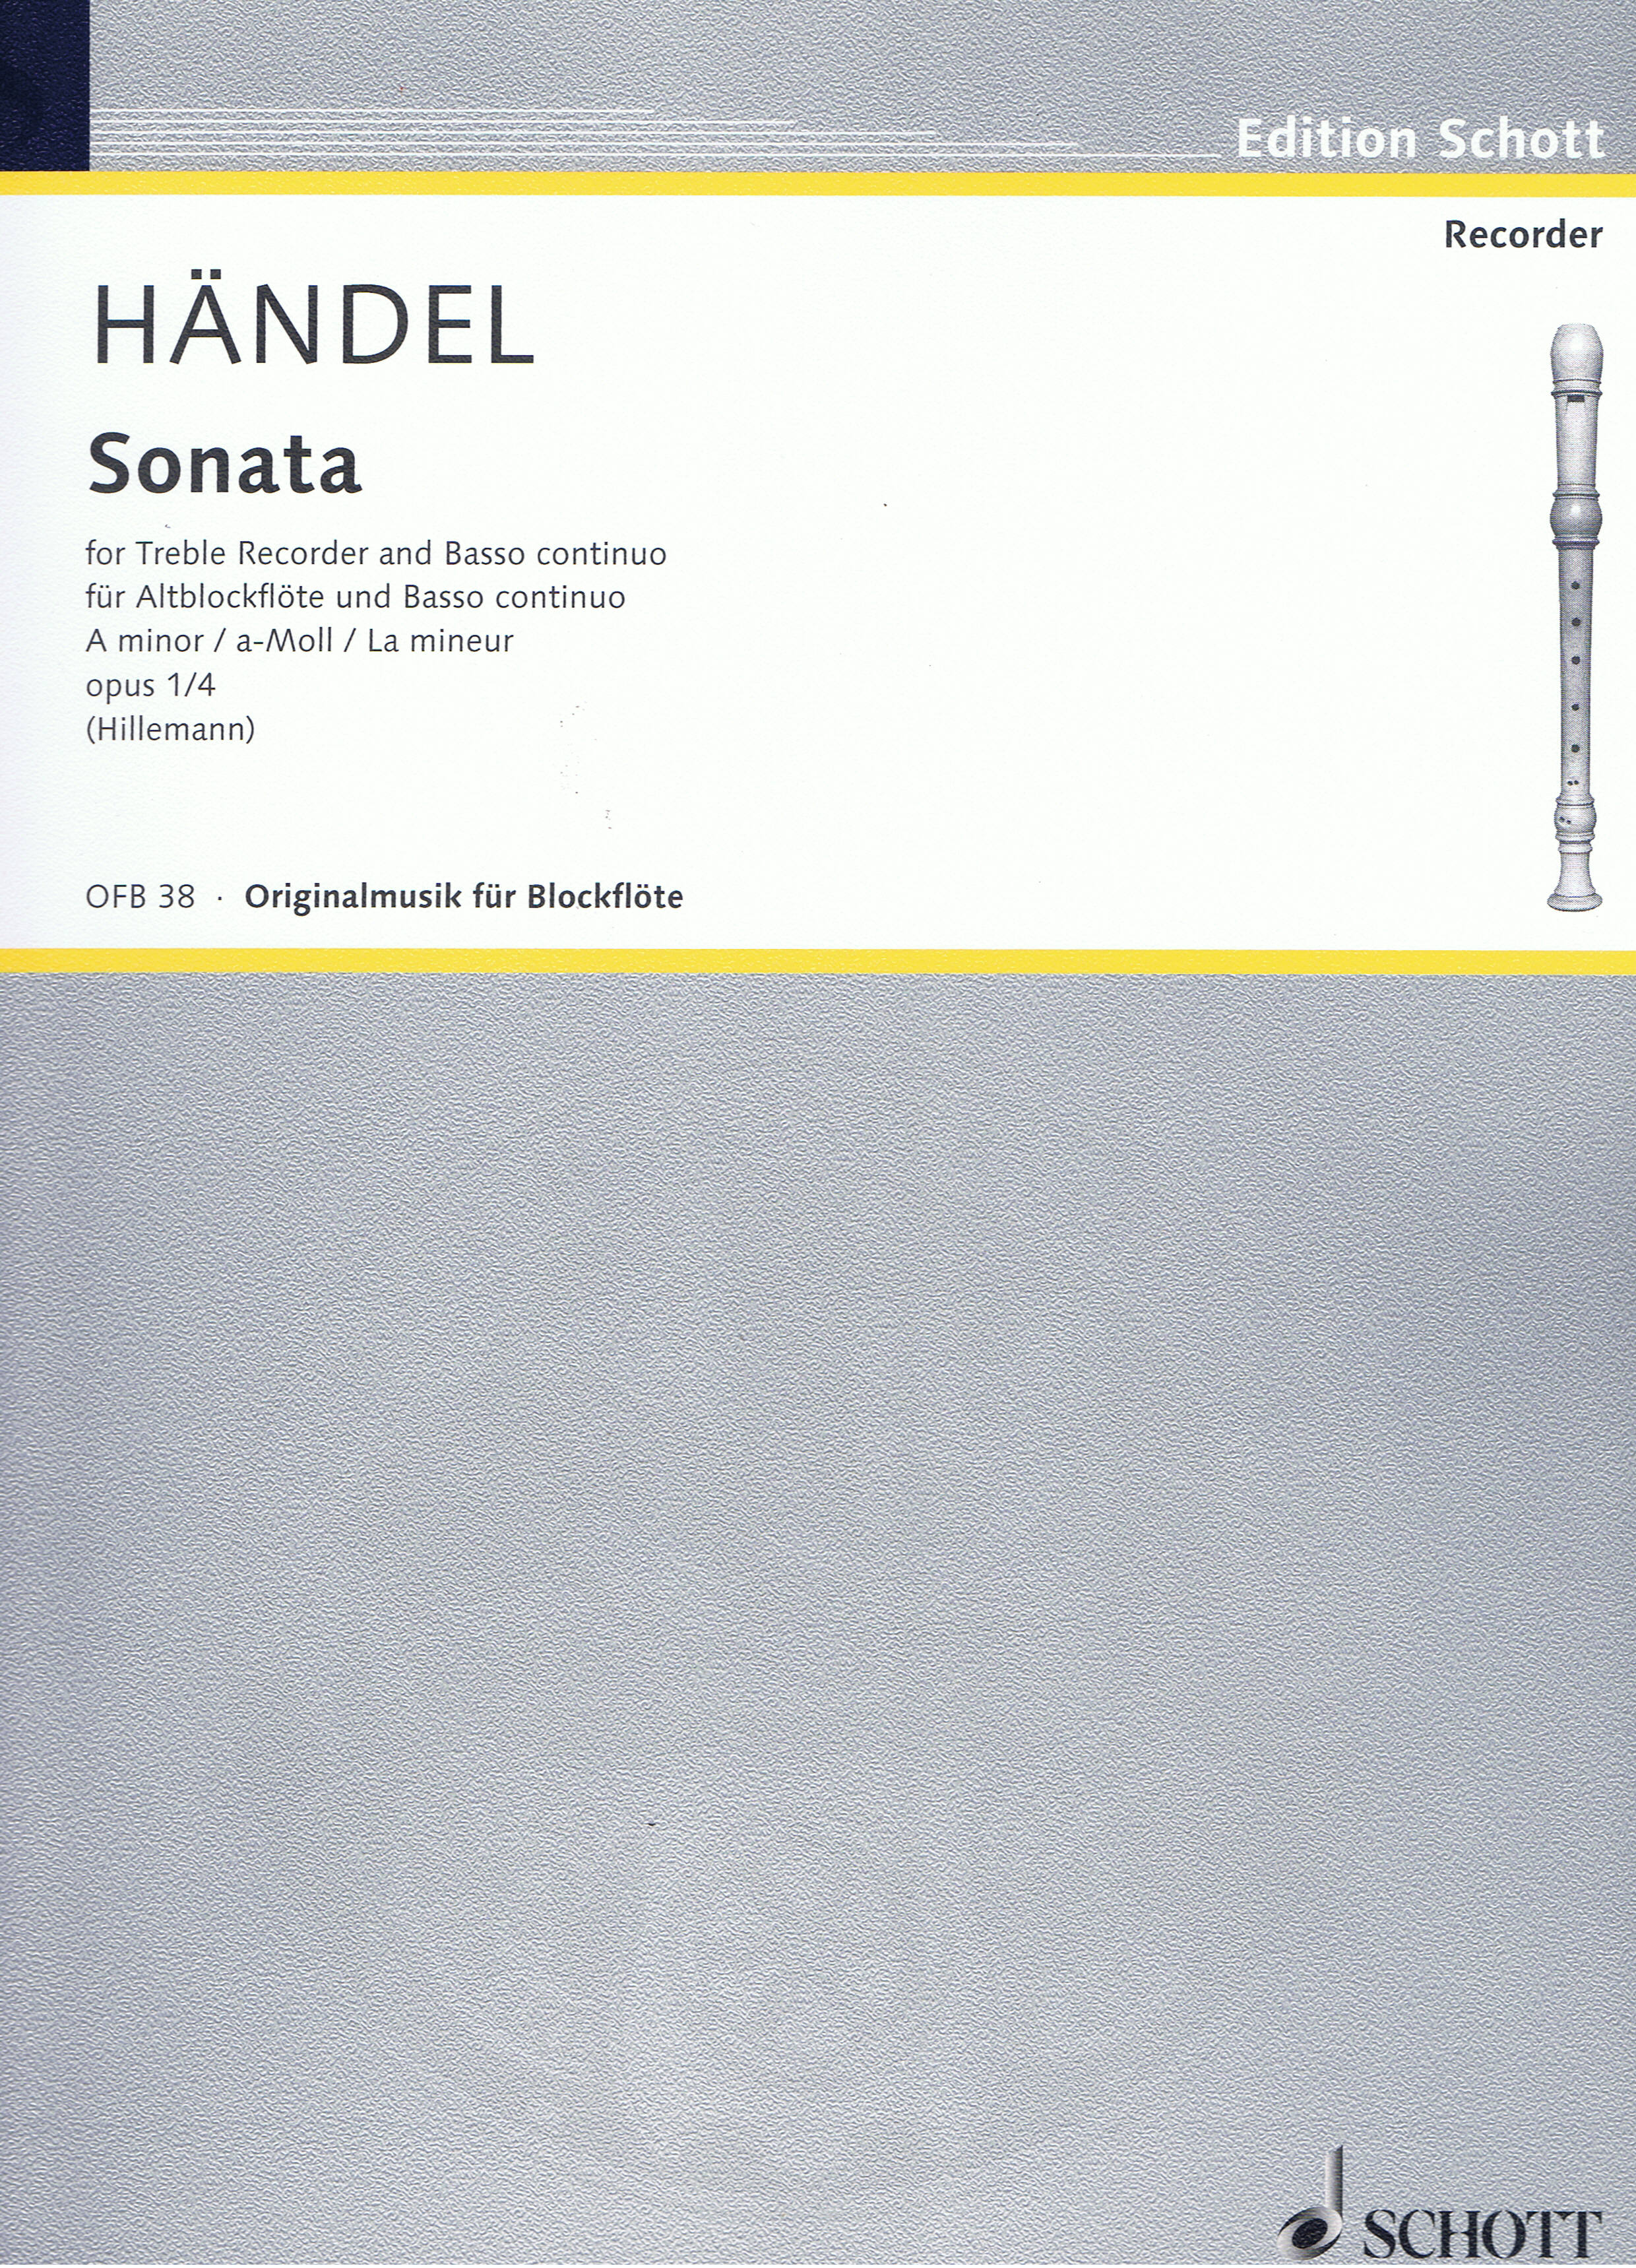 Georg Friedrich Hndel: Sonata in A Minor Op 1/4: Treble Recorder: Score and